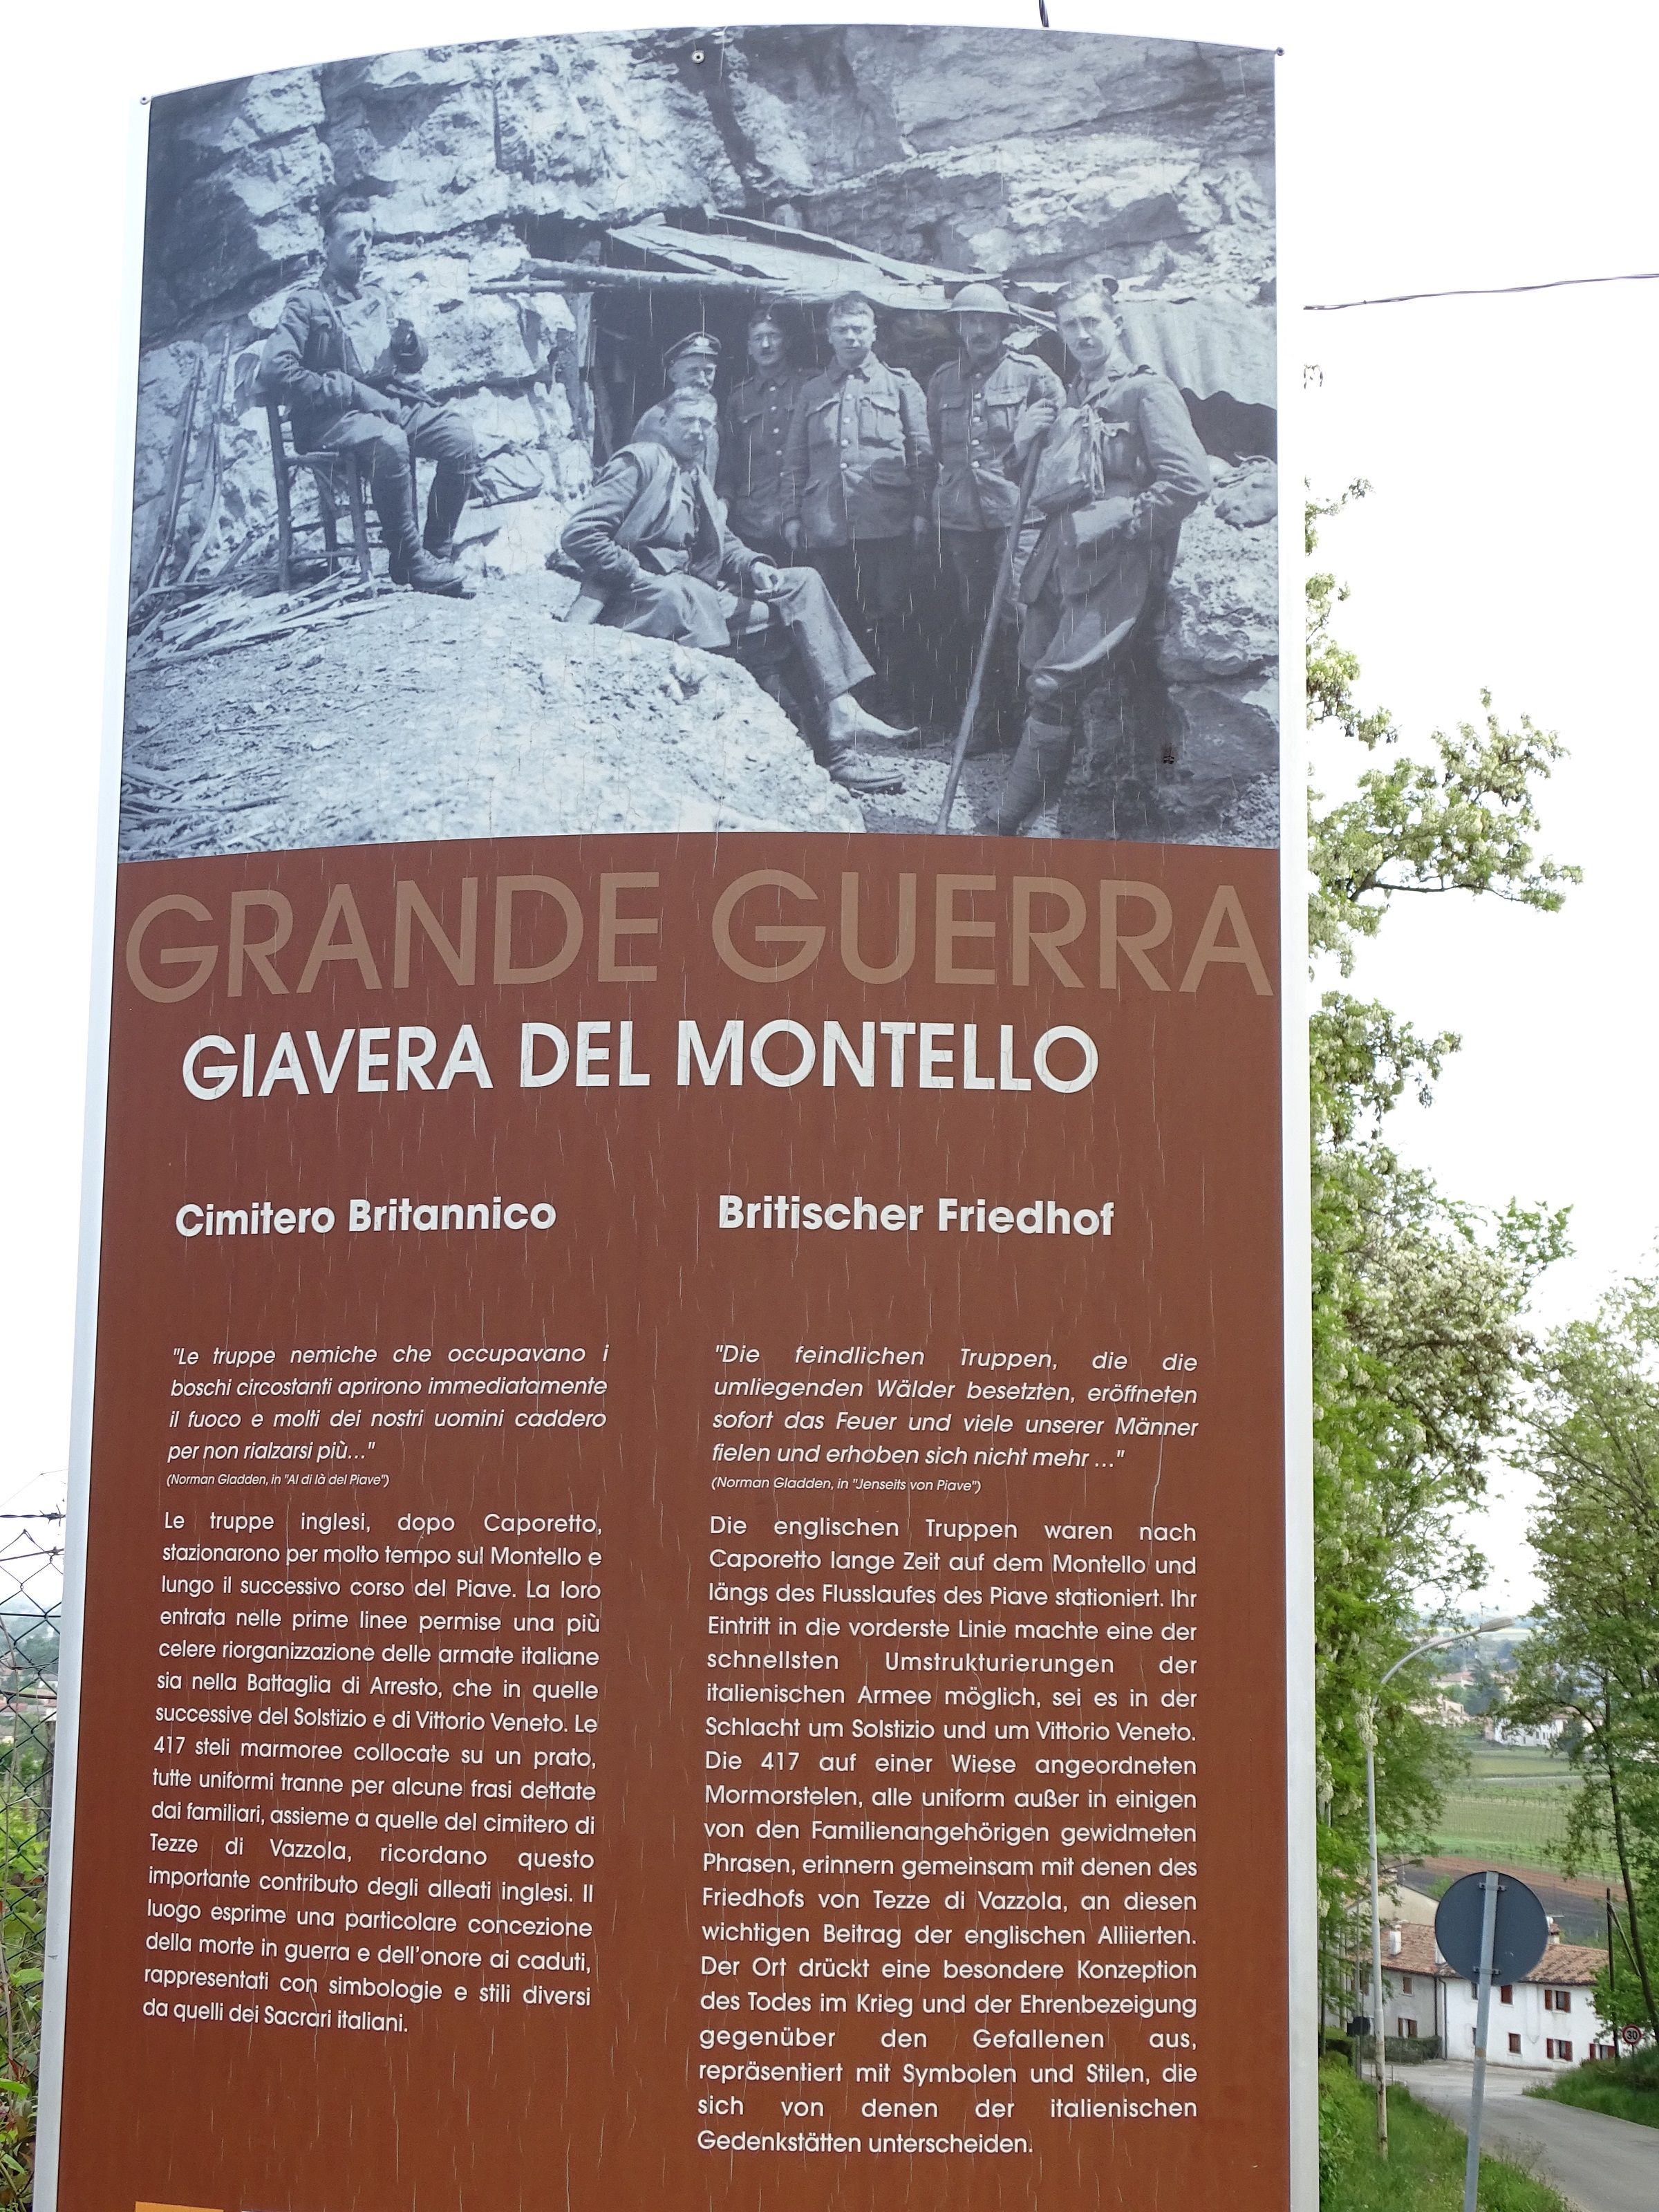 Giavera Del Montello - Monuments of the 1st World War - The British Cemetery